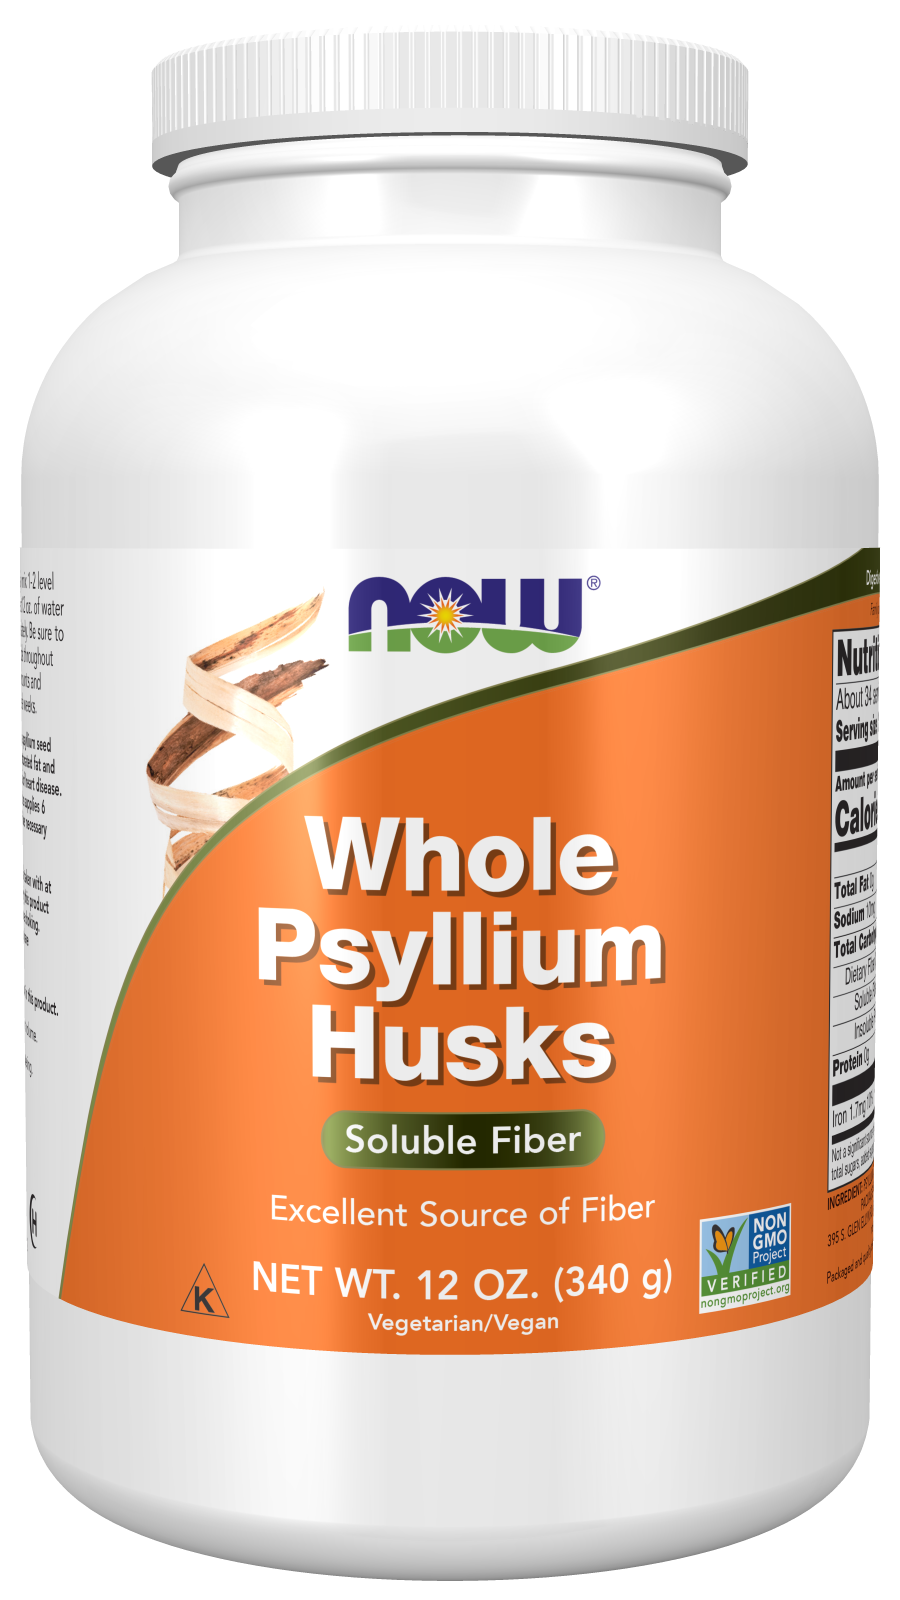 Psyllium Husks, Whole - 12 oz Bottle Front